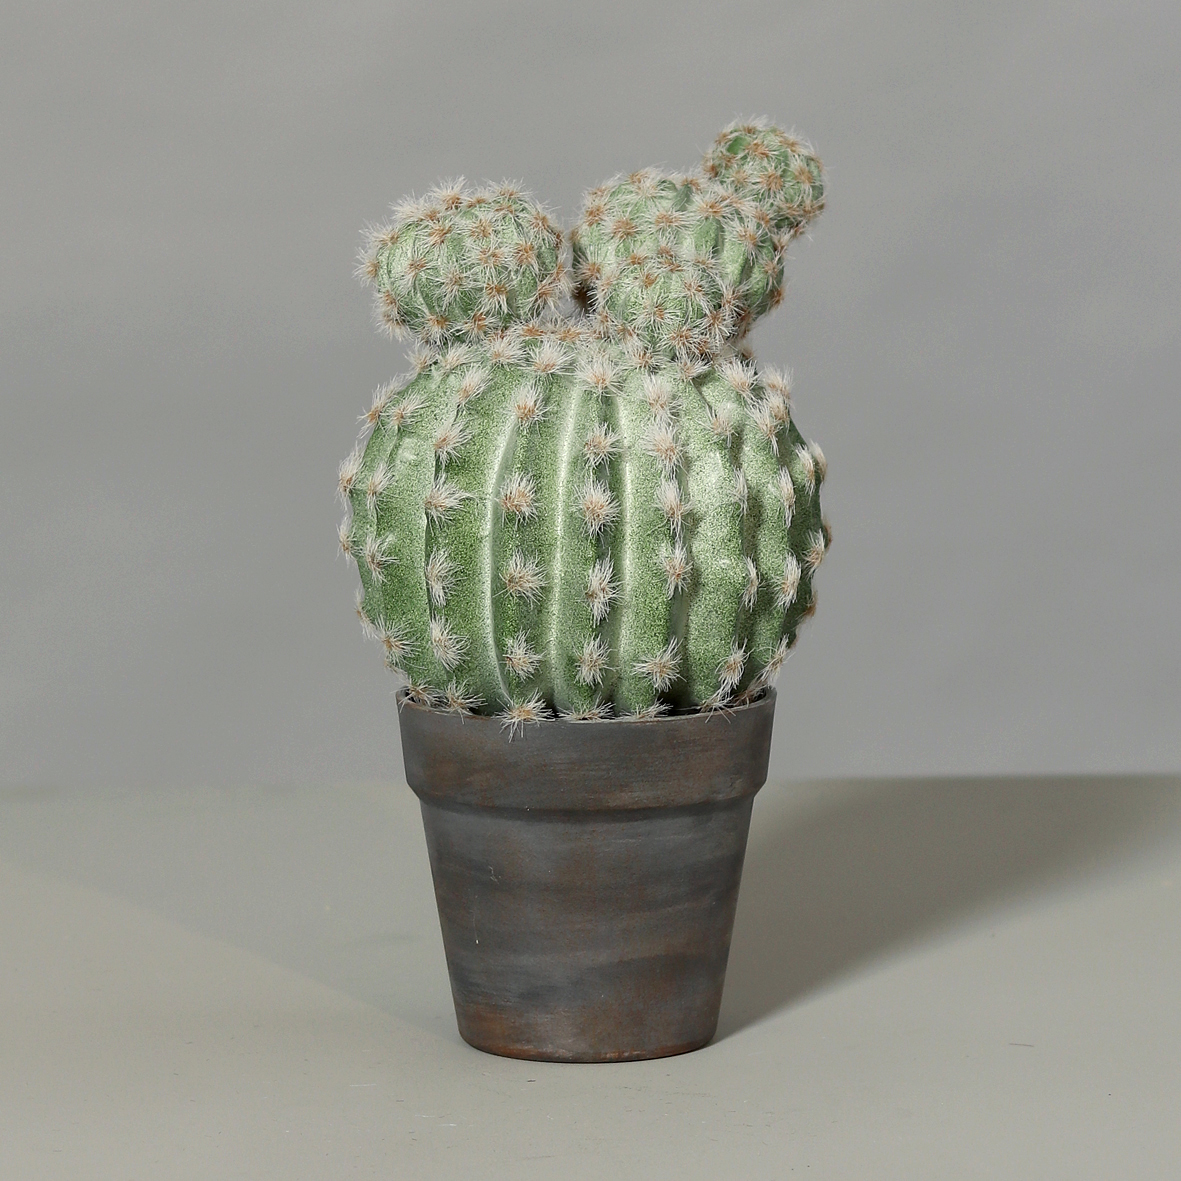 Kugelkaktus Natura 34x18cm im Topf DP Kunstpflanzen künstliche Kakteen Pflanzen künstlicher Kaktus